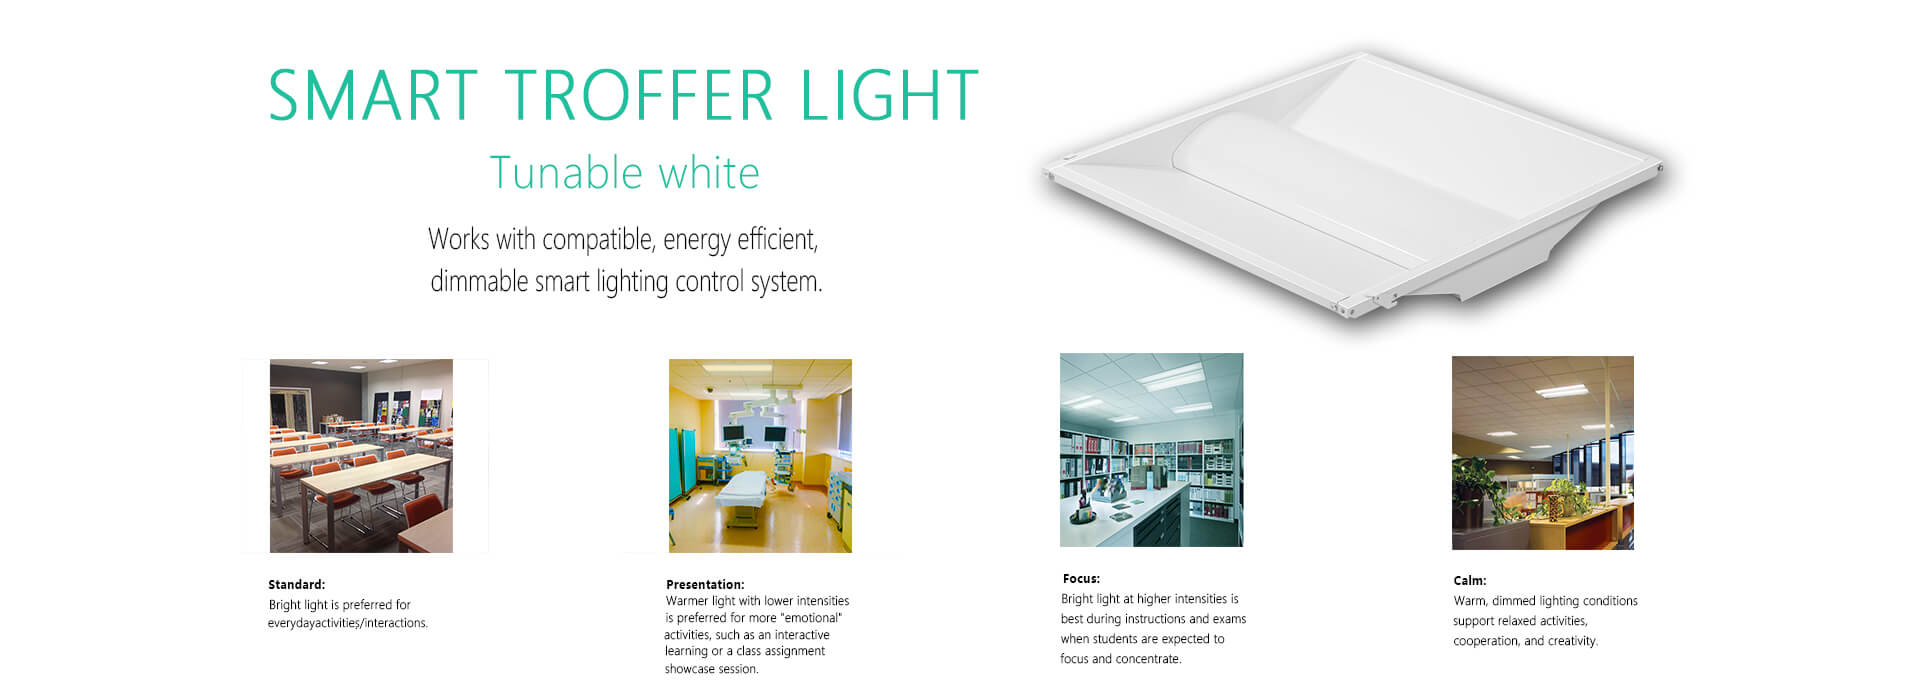 smart tunable white troffer light